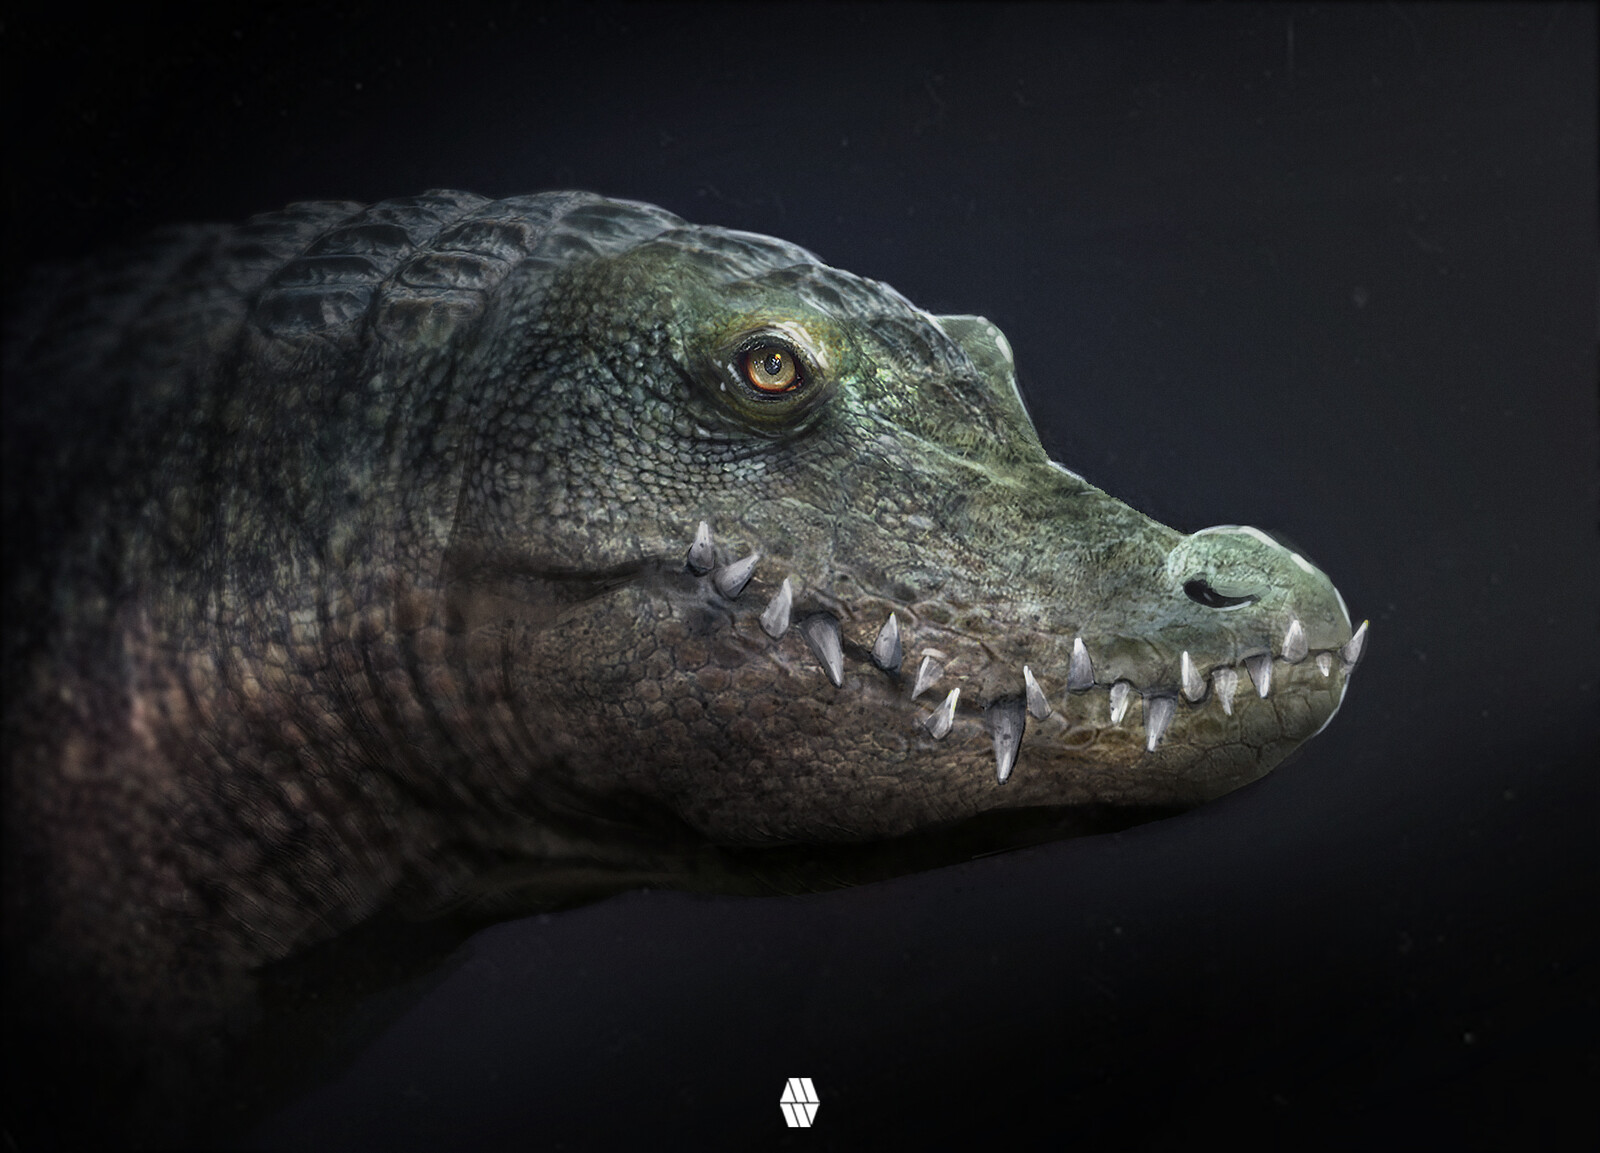 Dinosaur/Crocodile Bust Concept - Personal Project